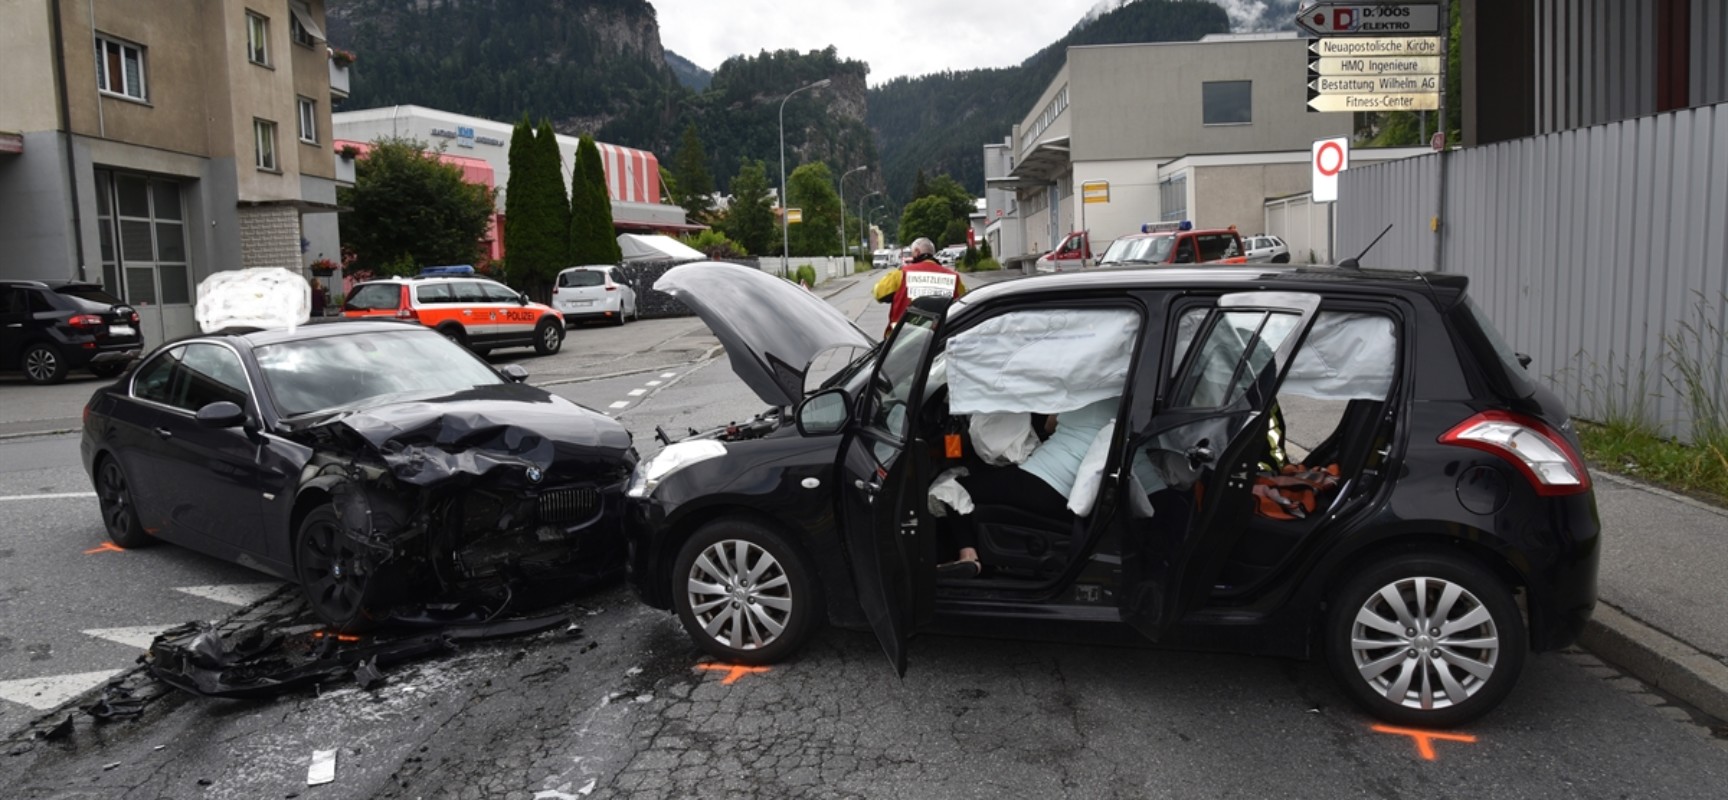 Thusis: Beifahrerin nach Kollision gestorben